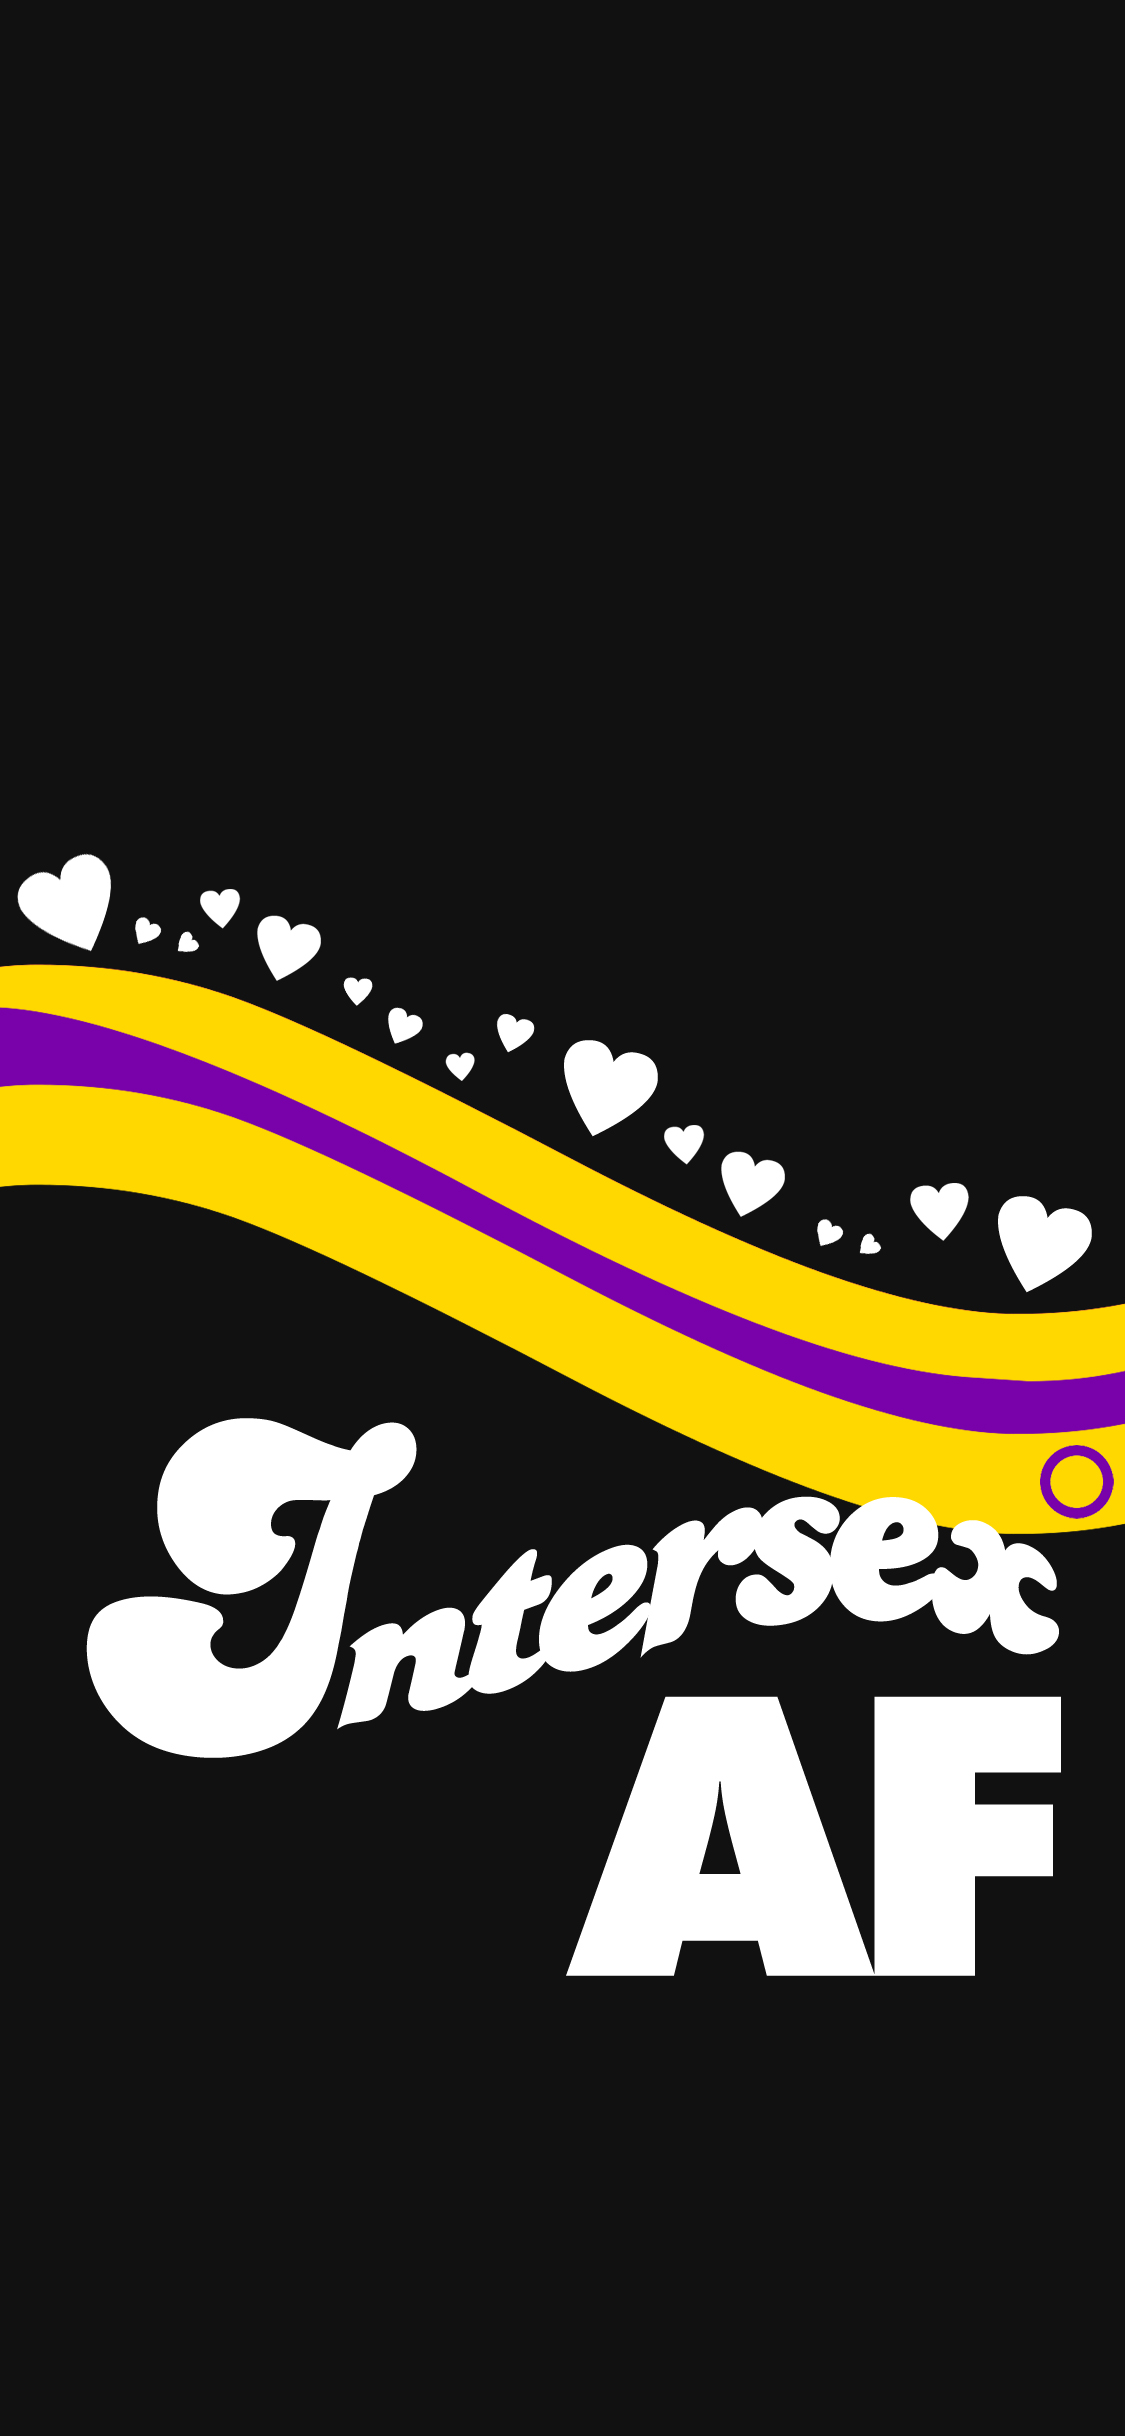 phone wallpaper displaying lgbtqia+ pride (intersex AF)